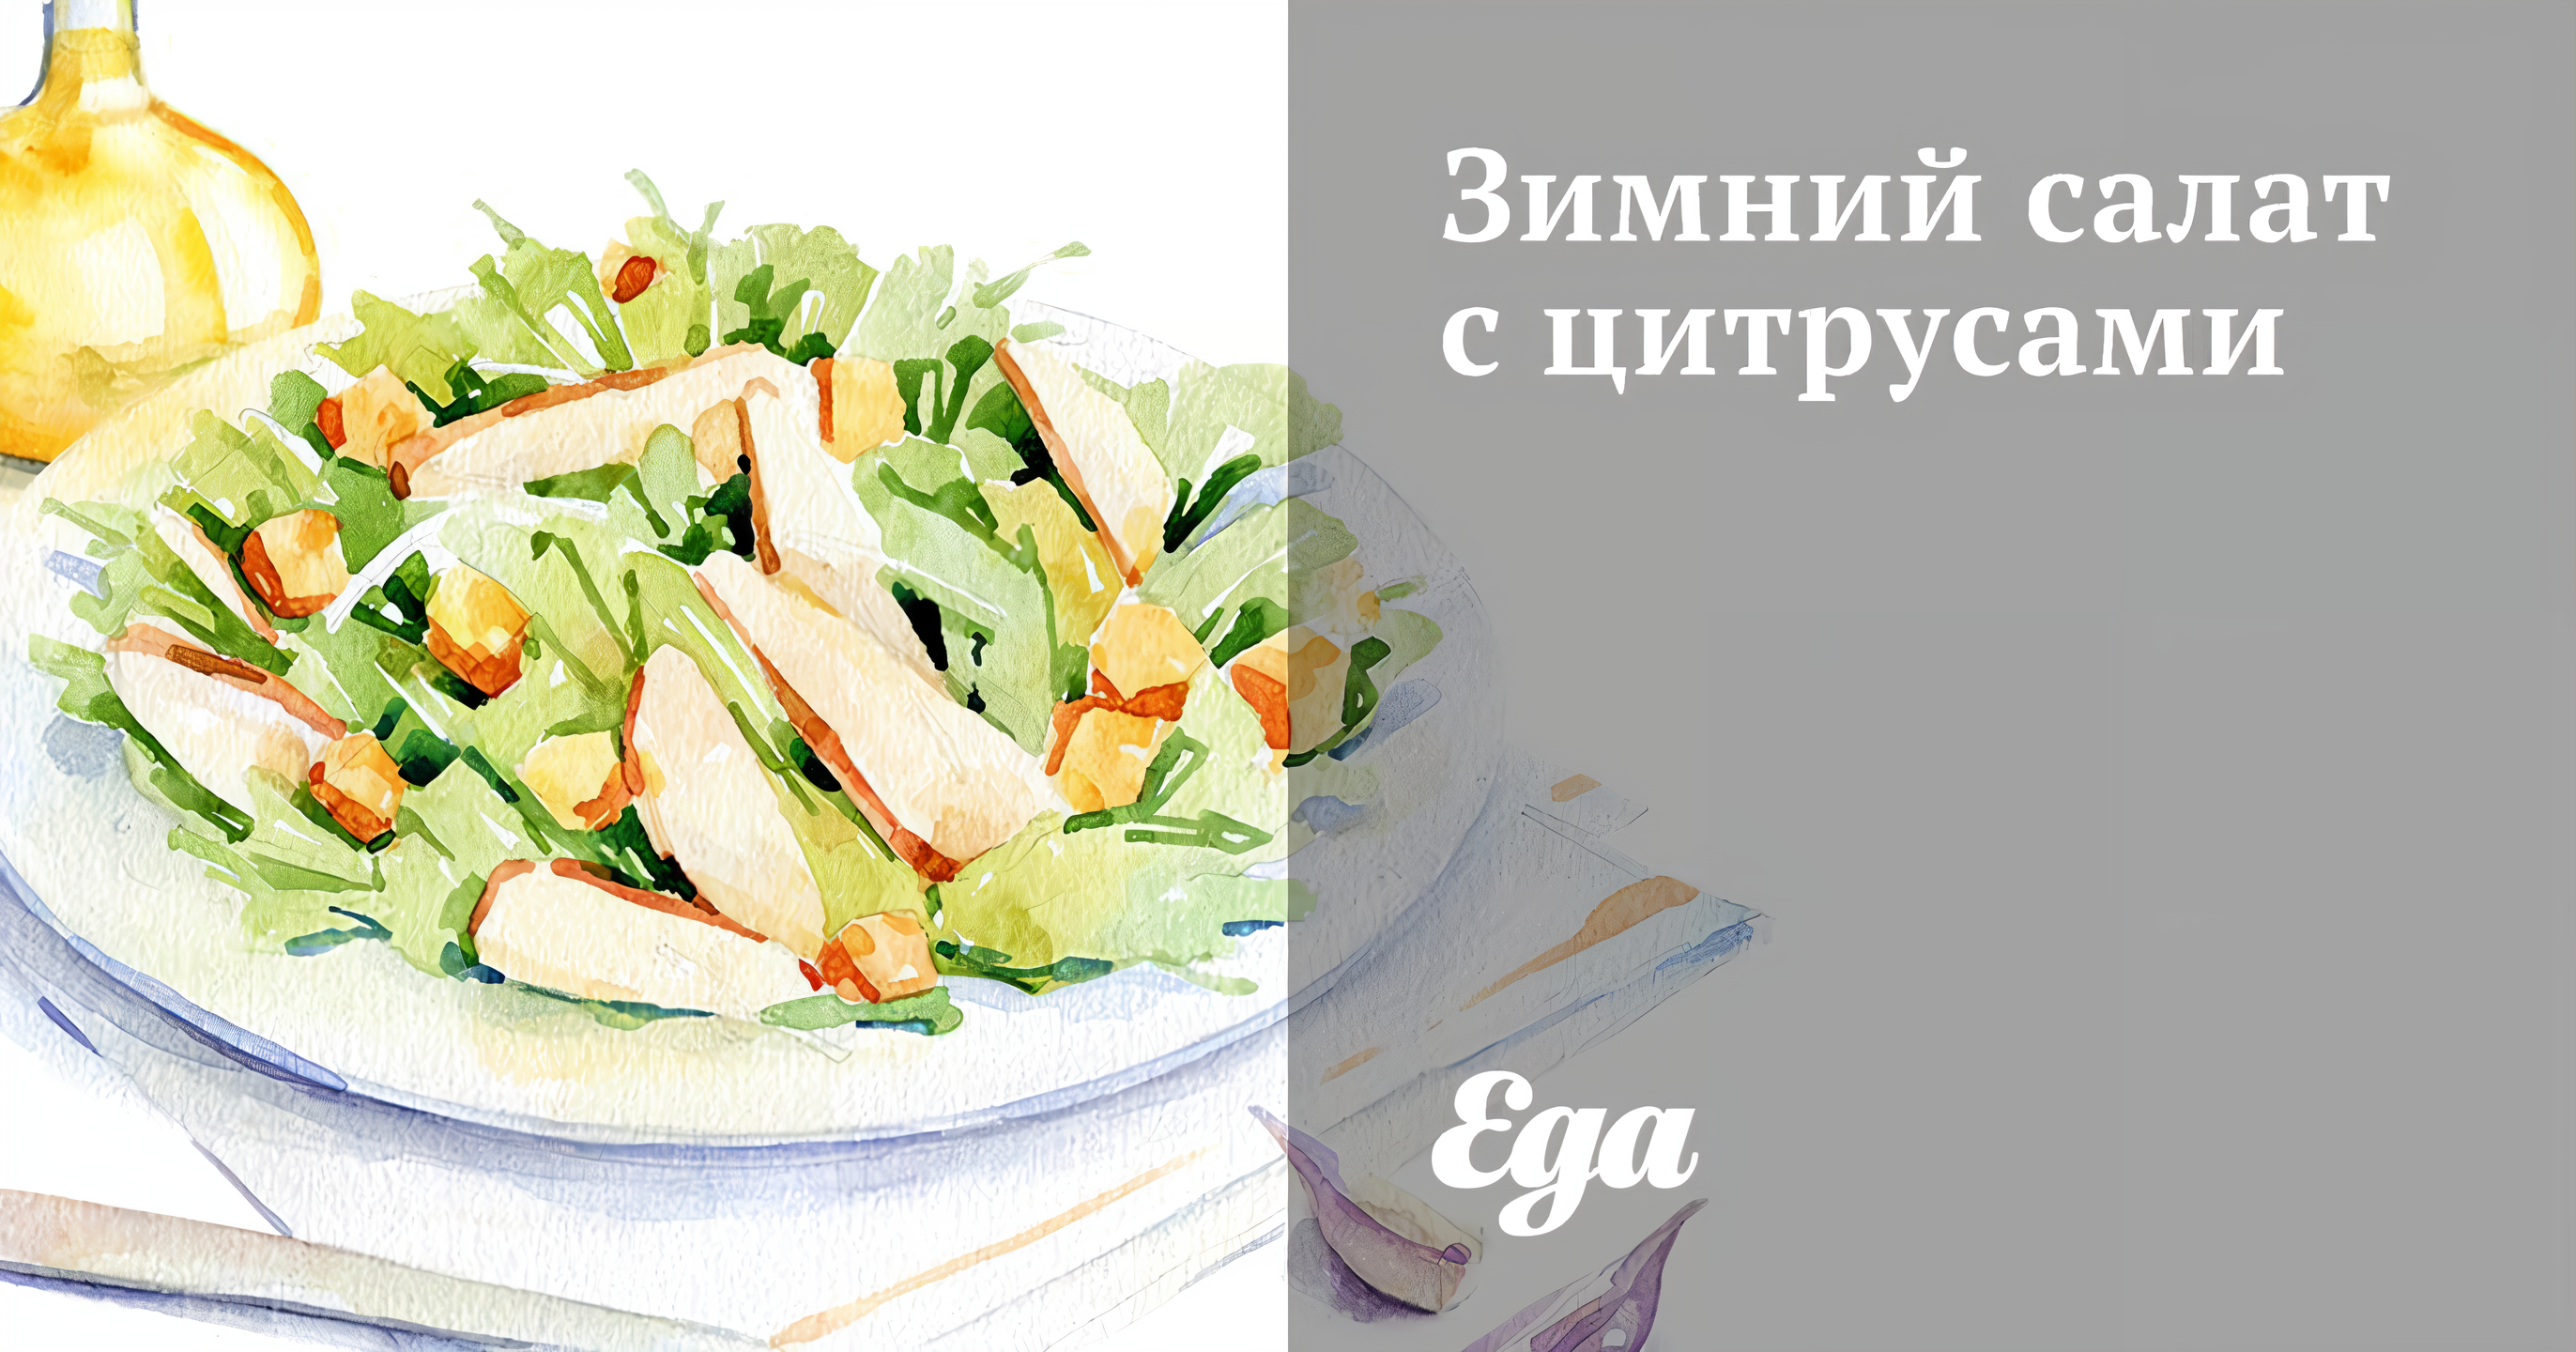 Зимний салат с цитрусами